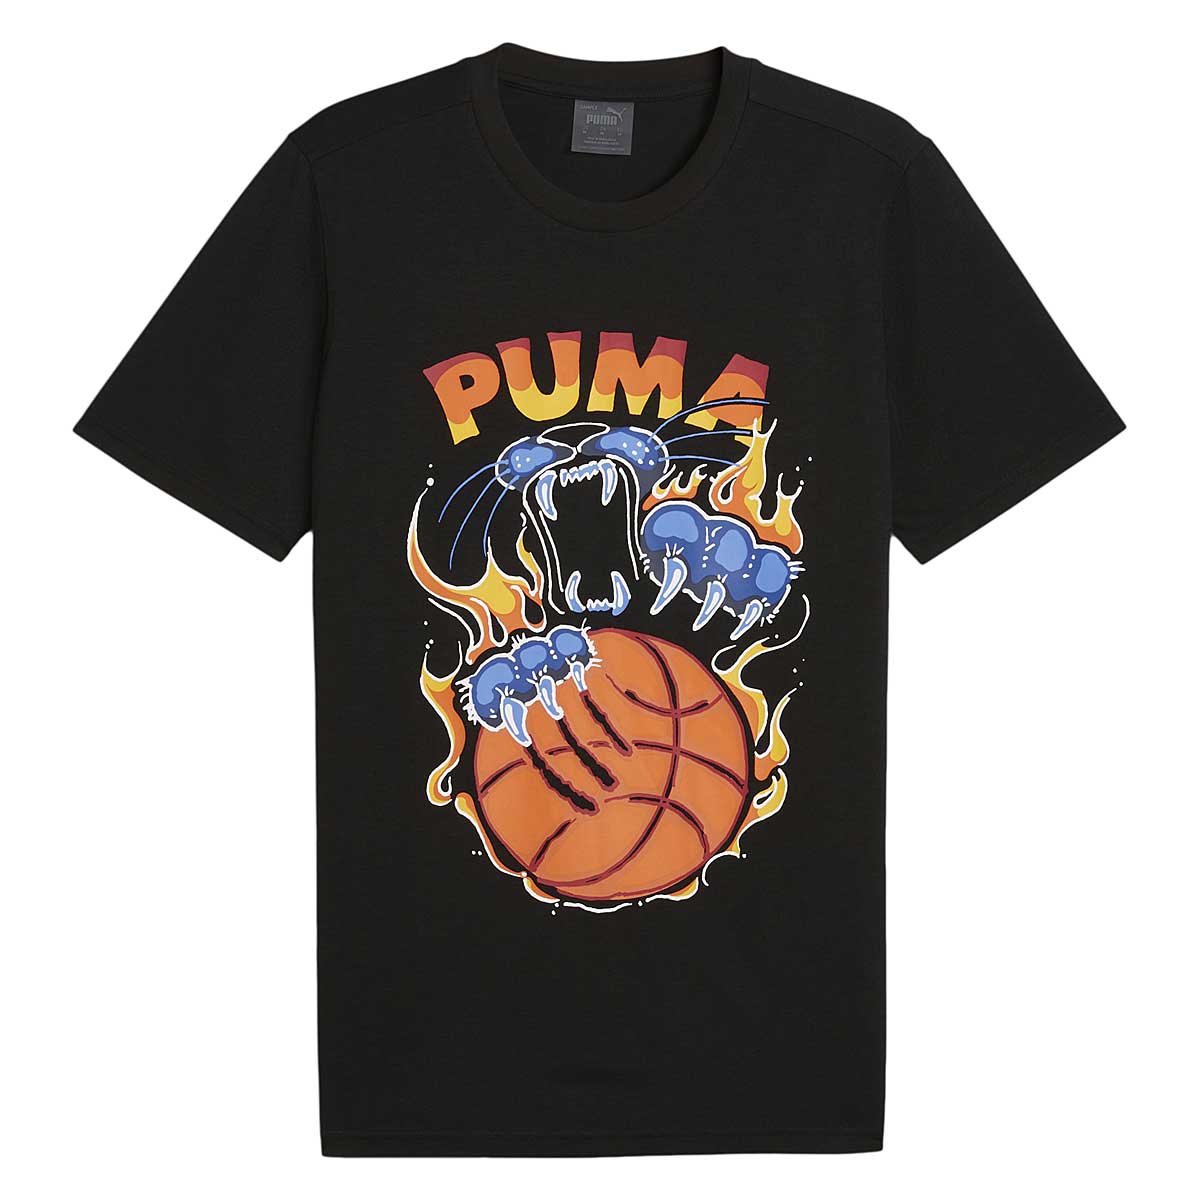 Puma Tsa T-shirt 6, Schwarz 2XL